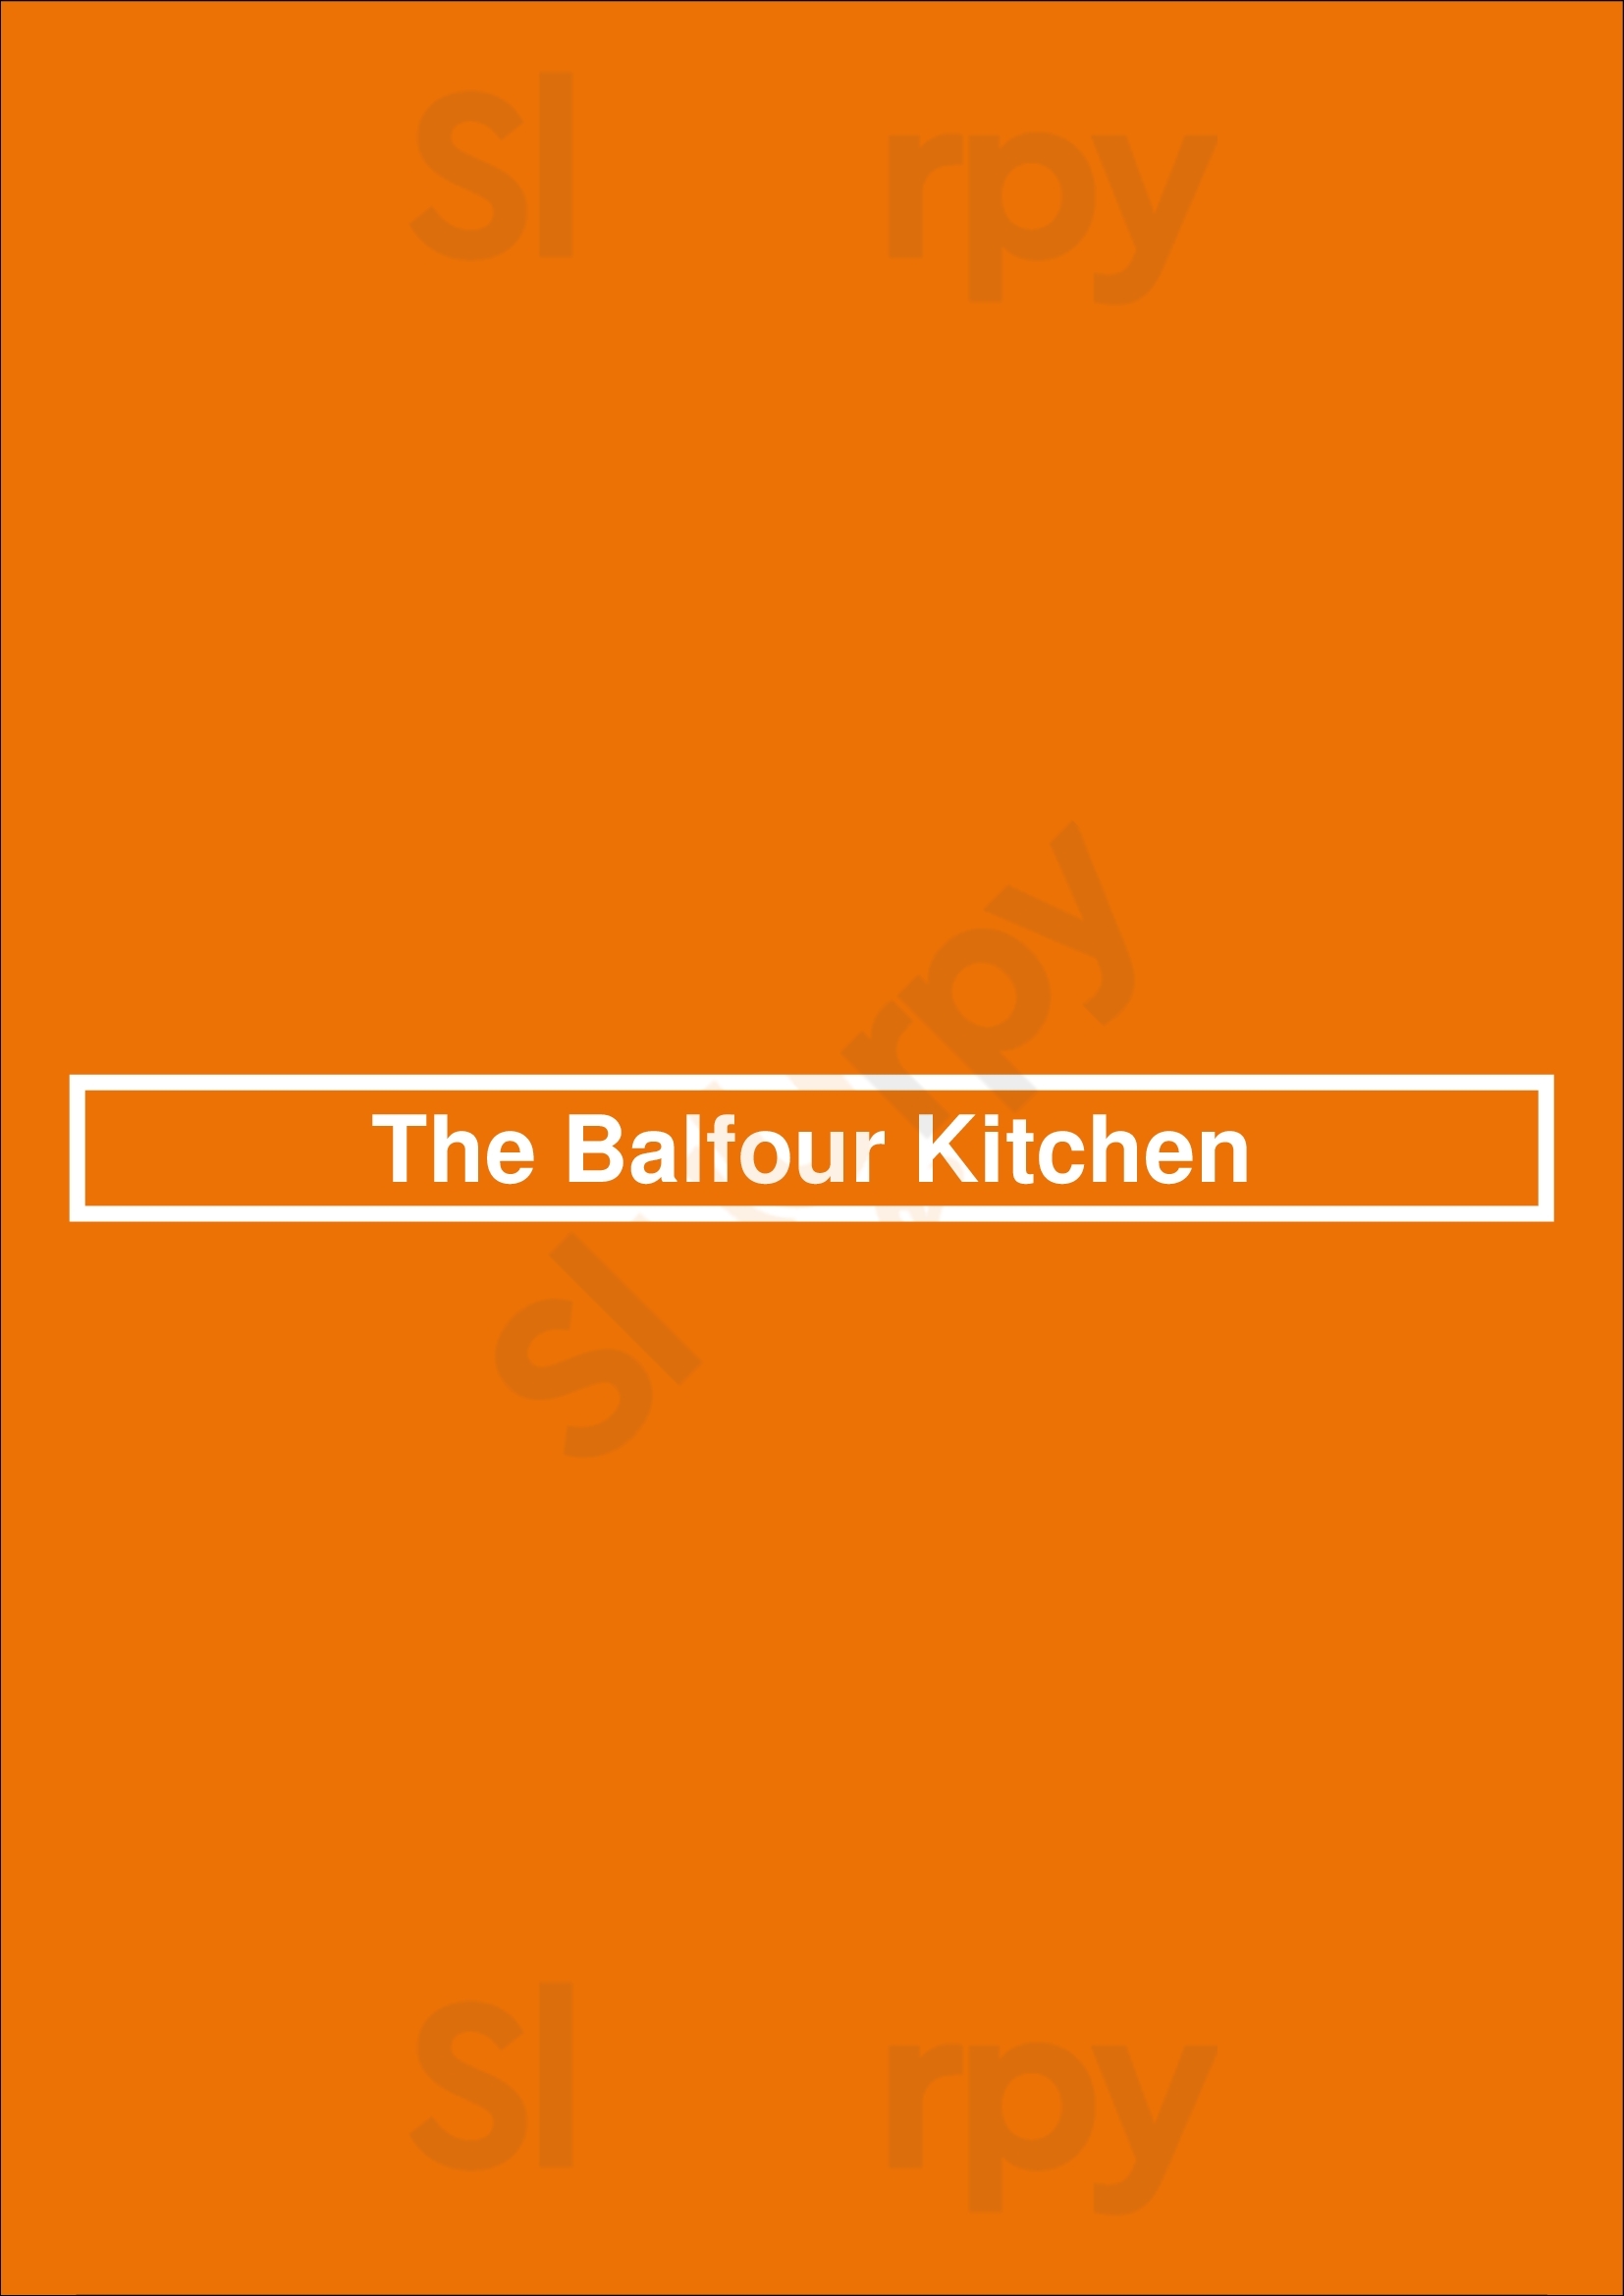 The Balfour Kitchen & Bar Brisbane Menu - 1